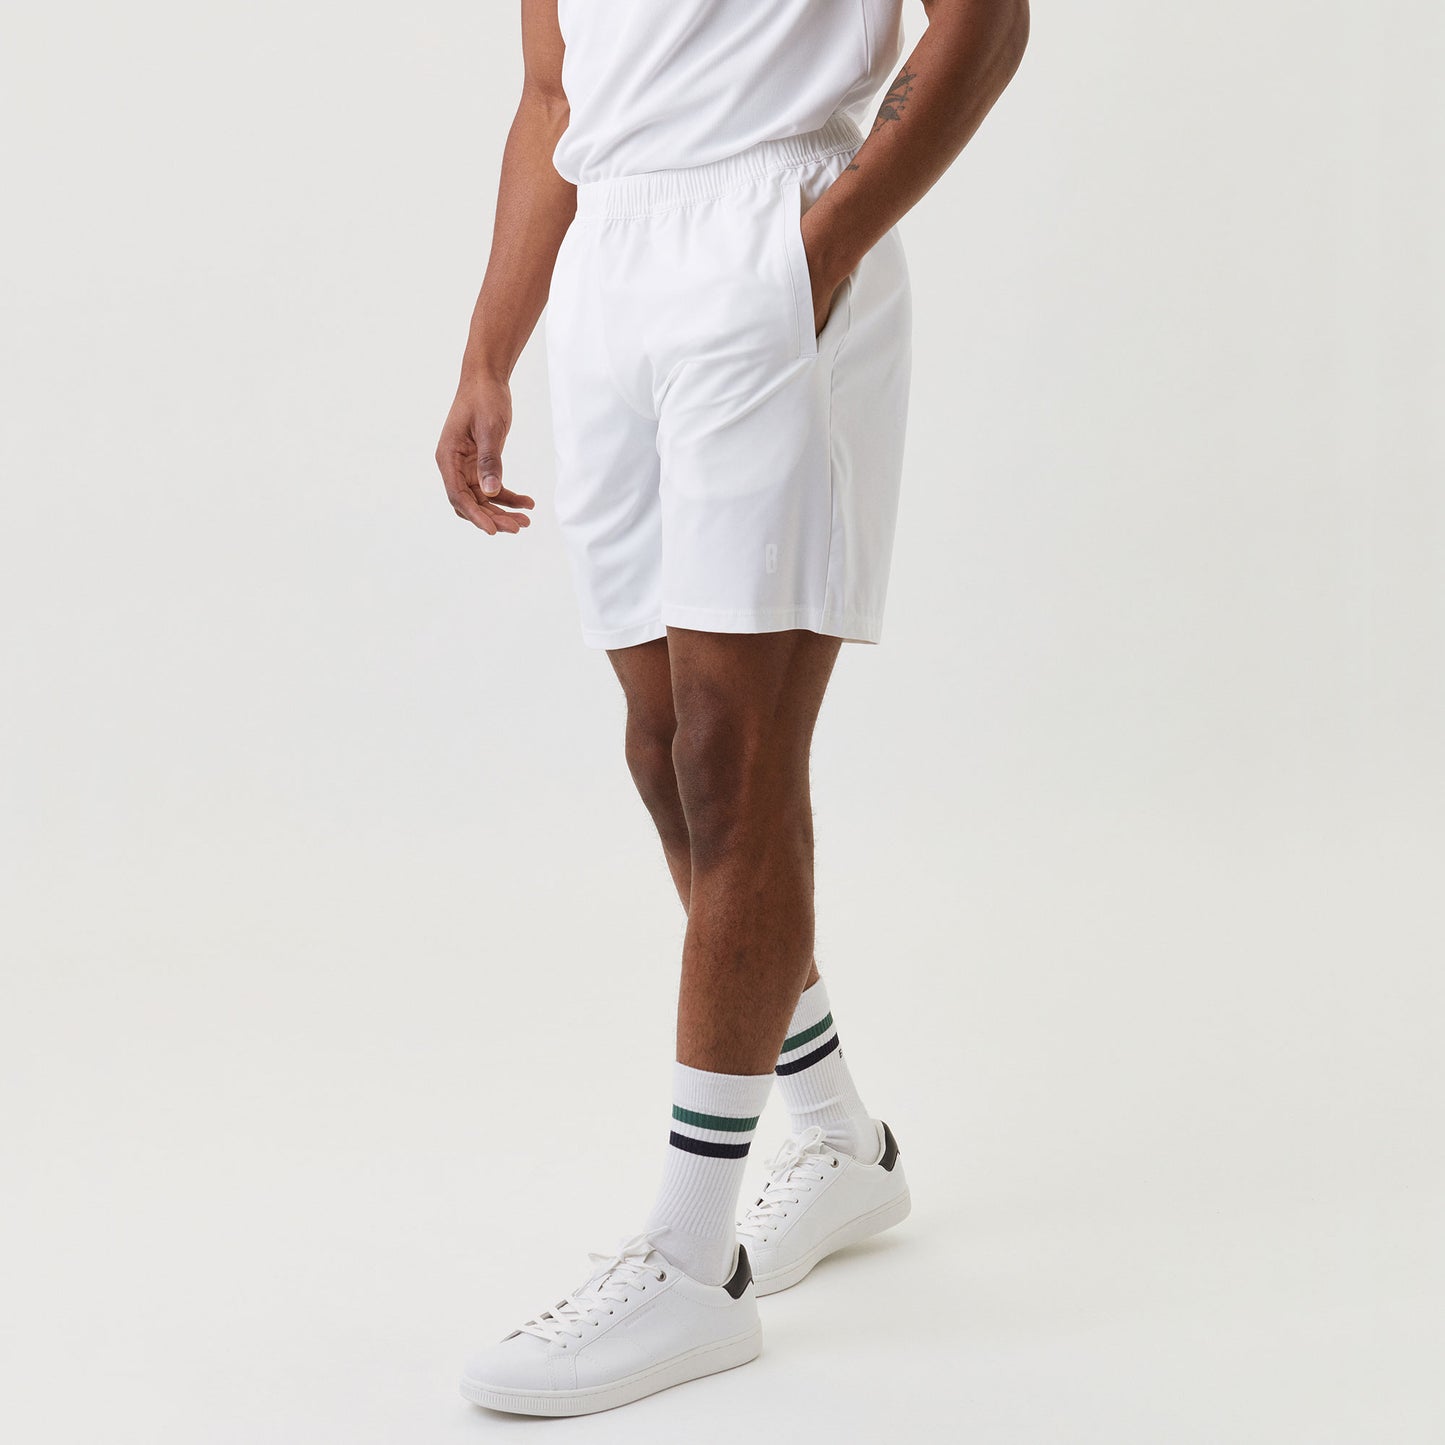 Björn Borg Ace Men's 9-Inch Tennis Shorts White (1)